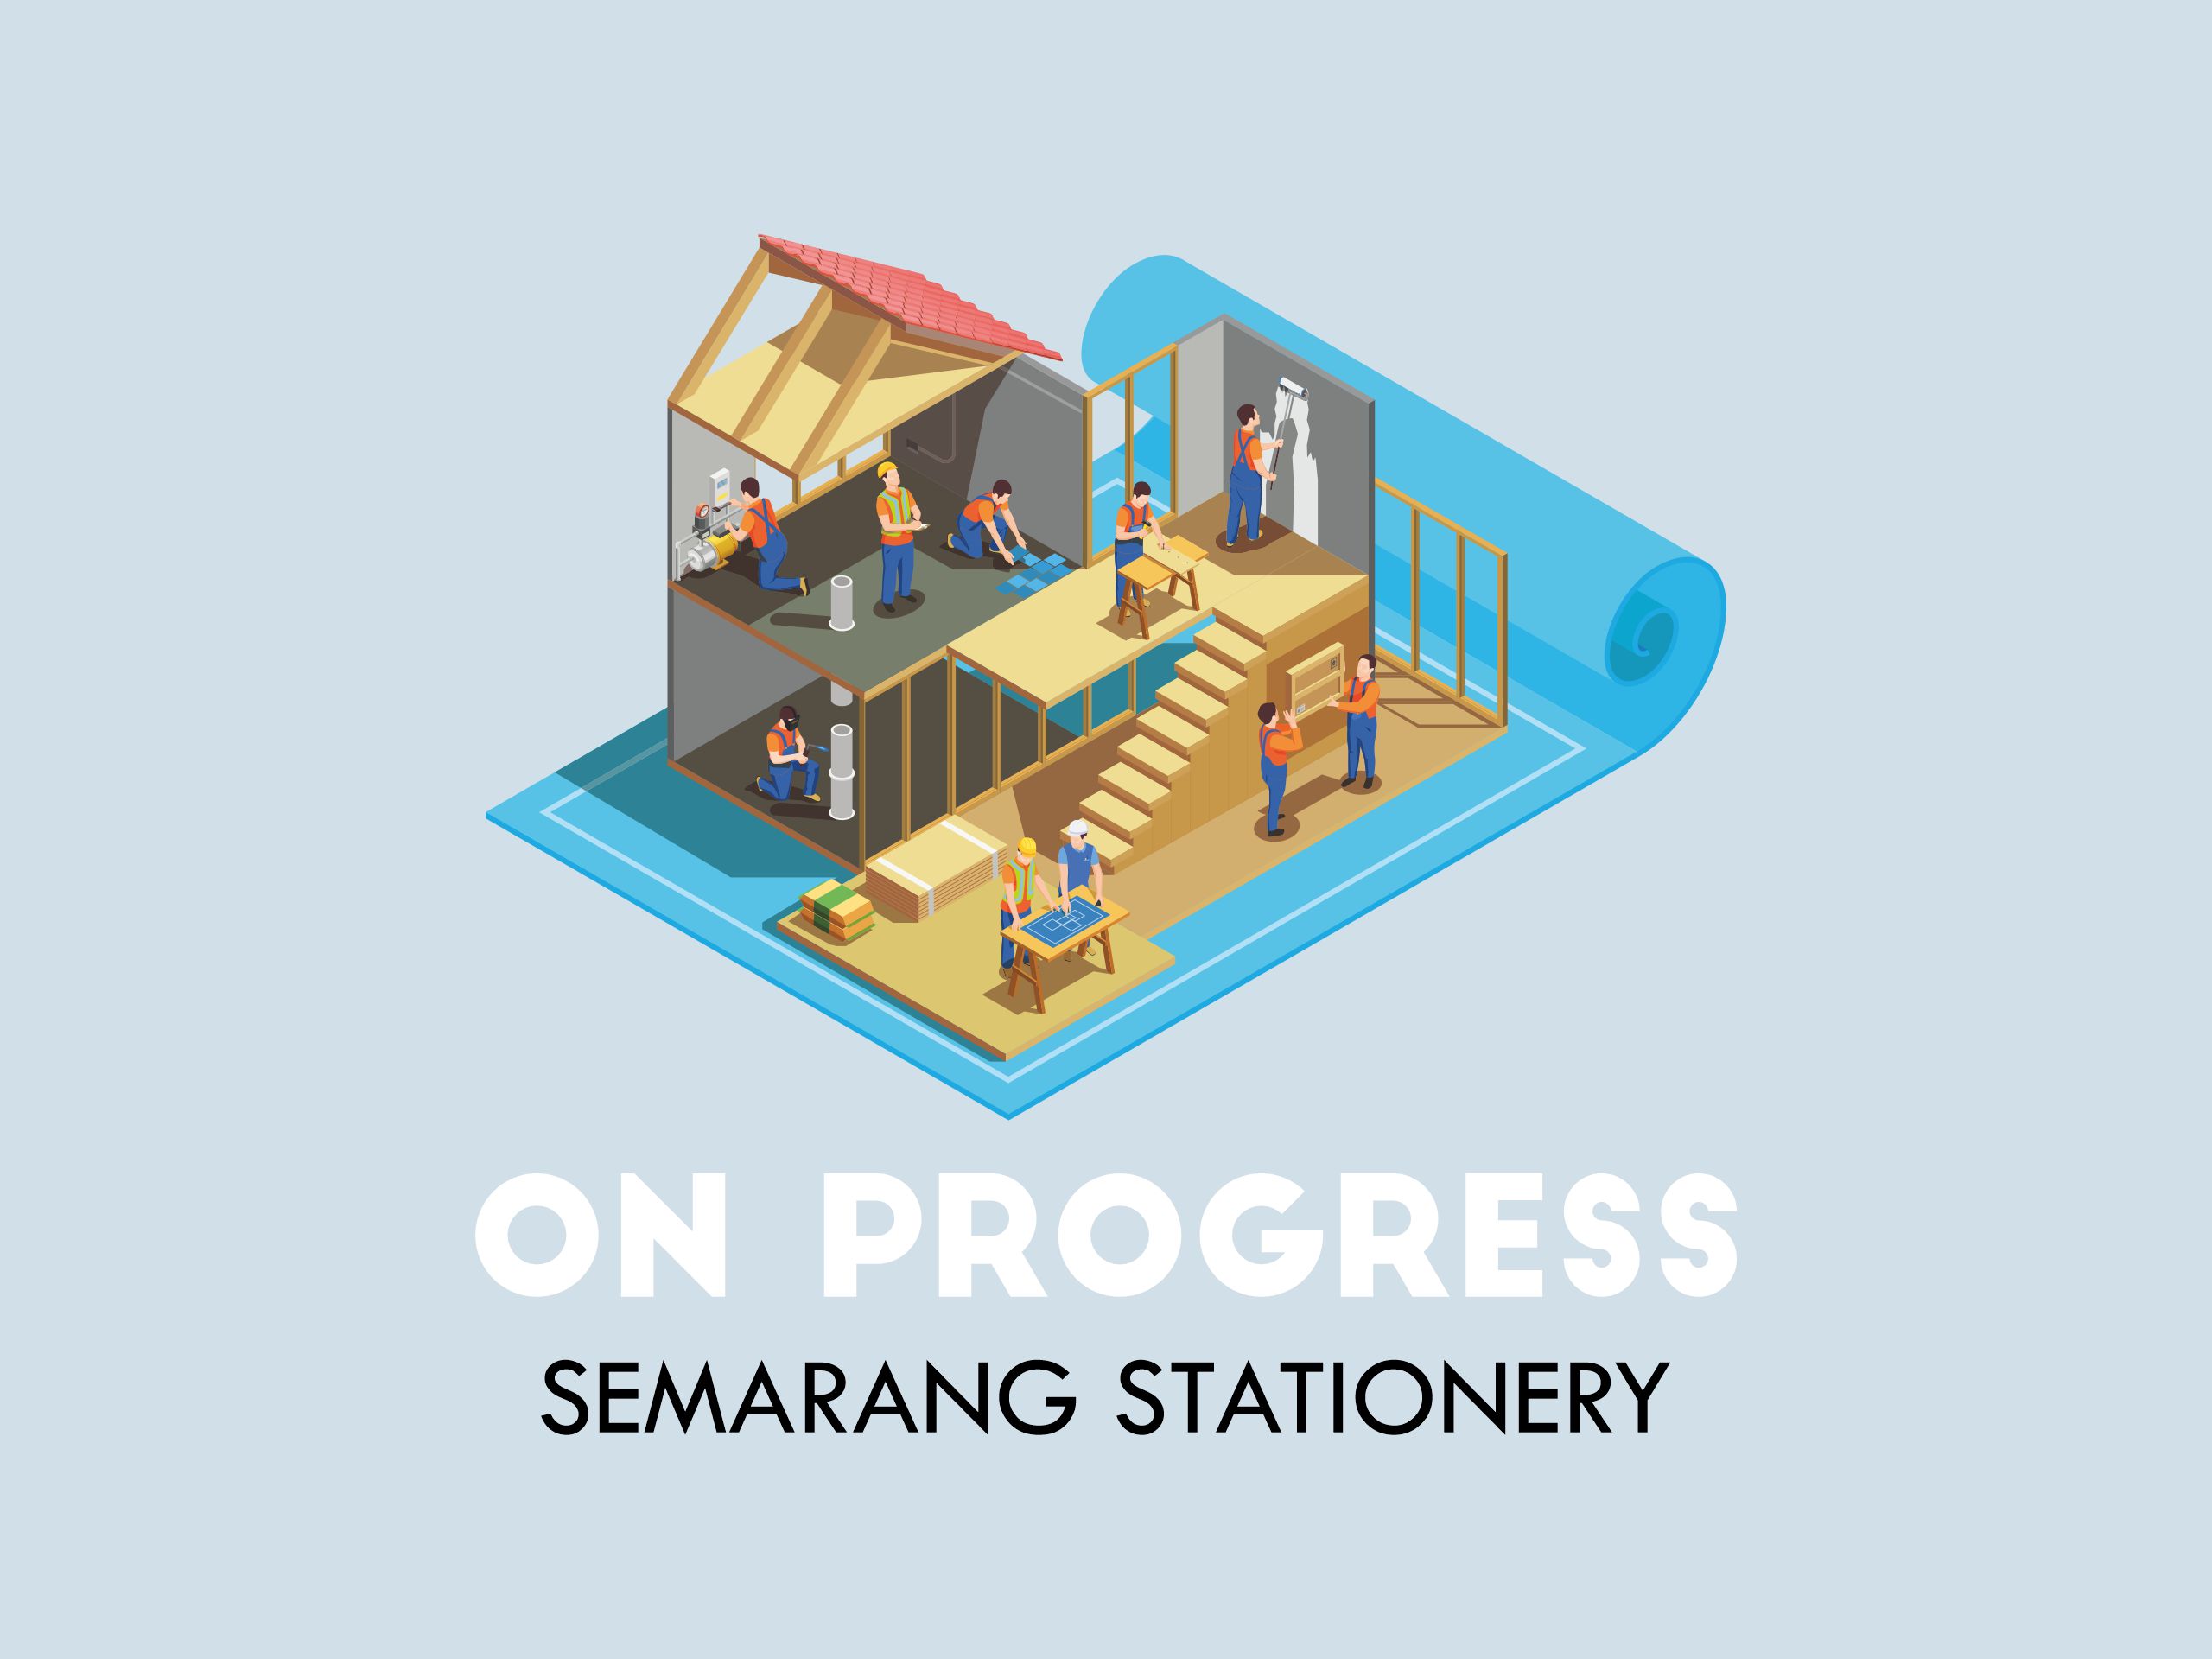 On Progress: Sabilissalam Stationery Semarang